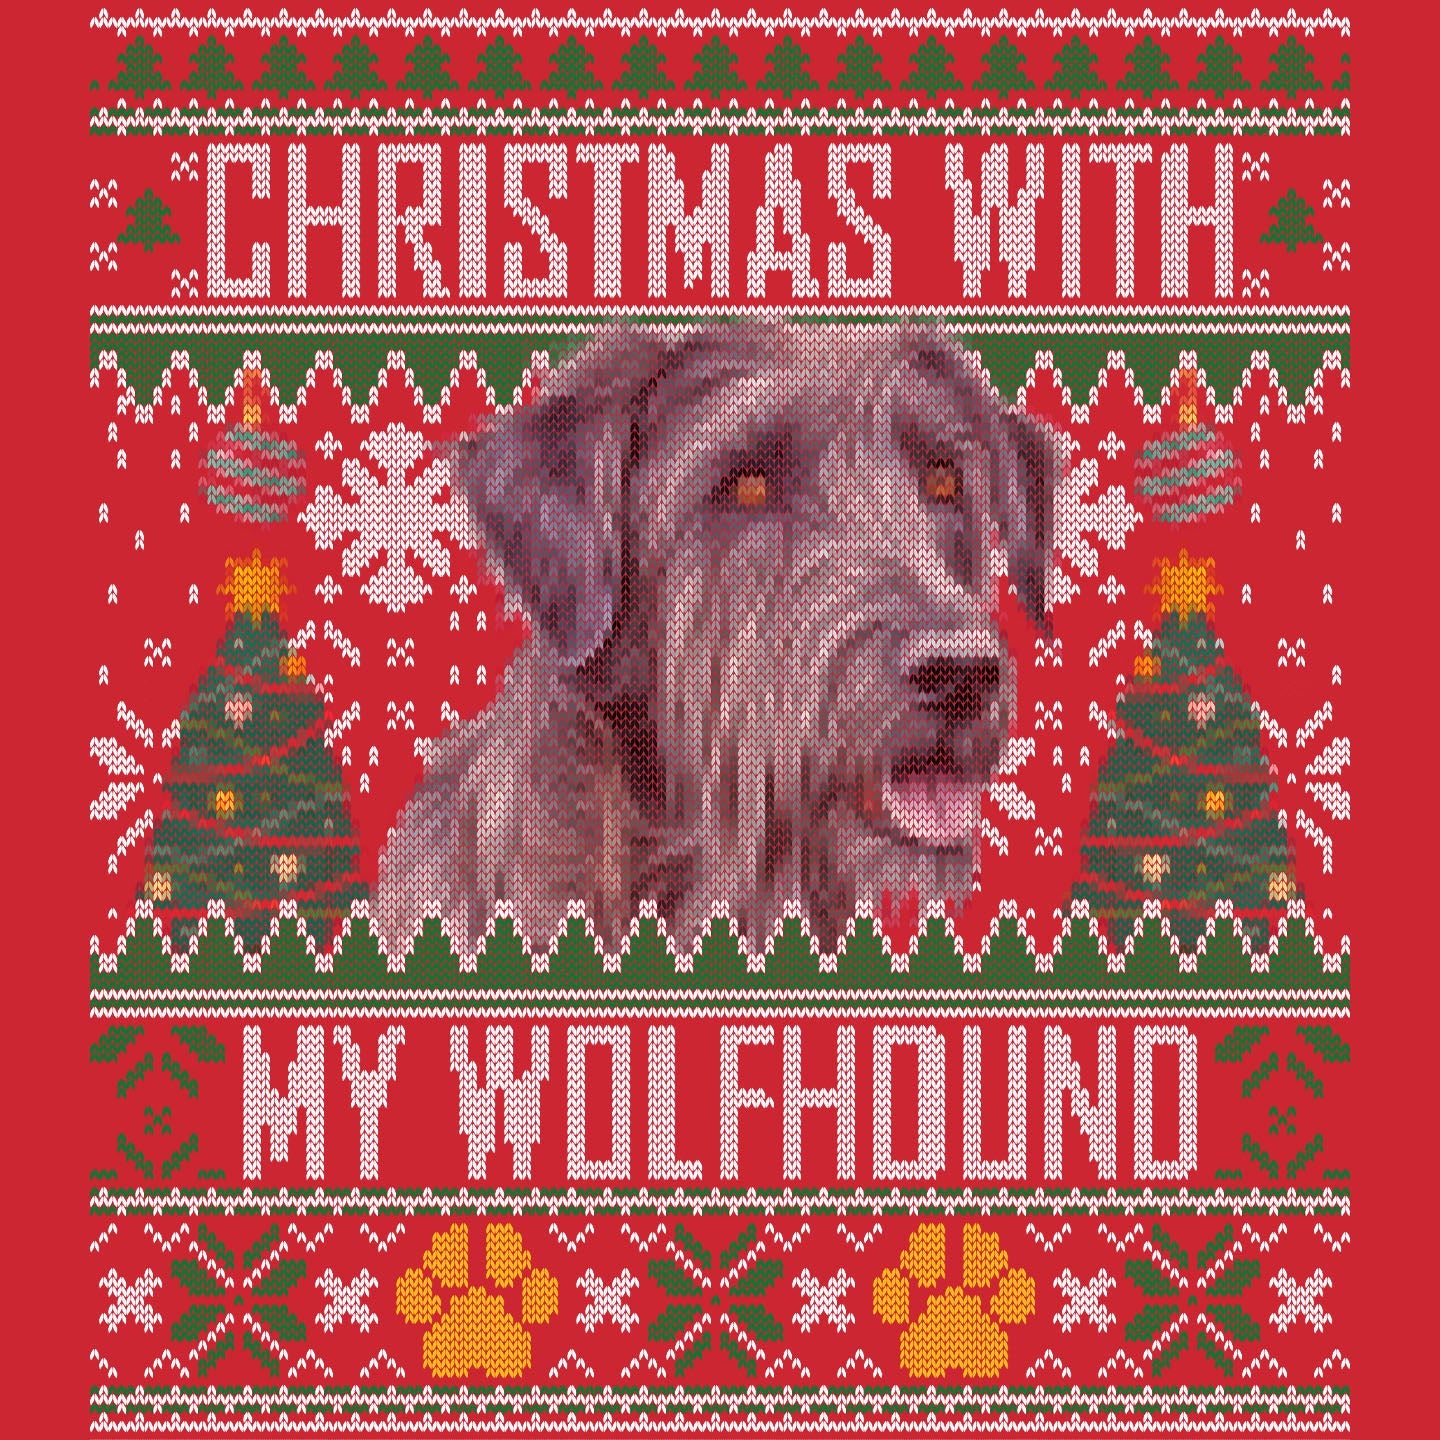 Ugly Sweater Christmas with My Irish Wolfhound - Adult Unisex Long Sleeve T-Shirt